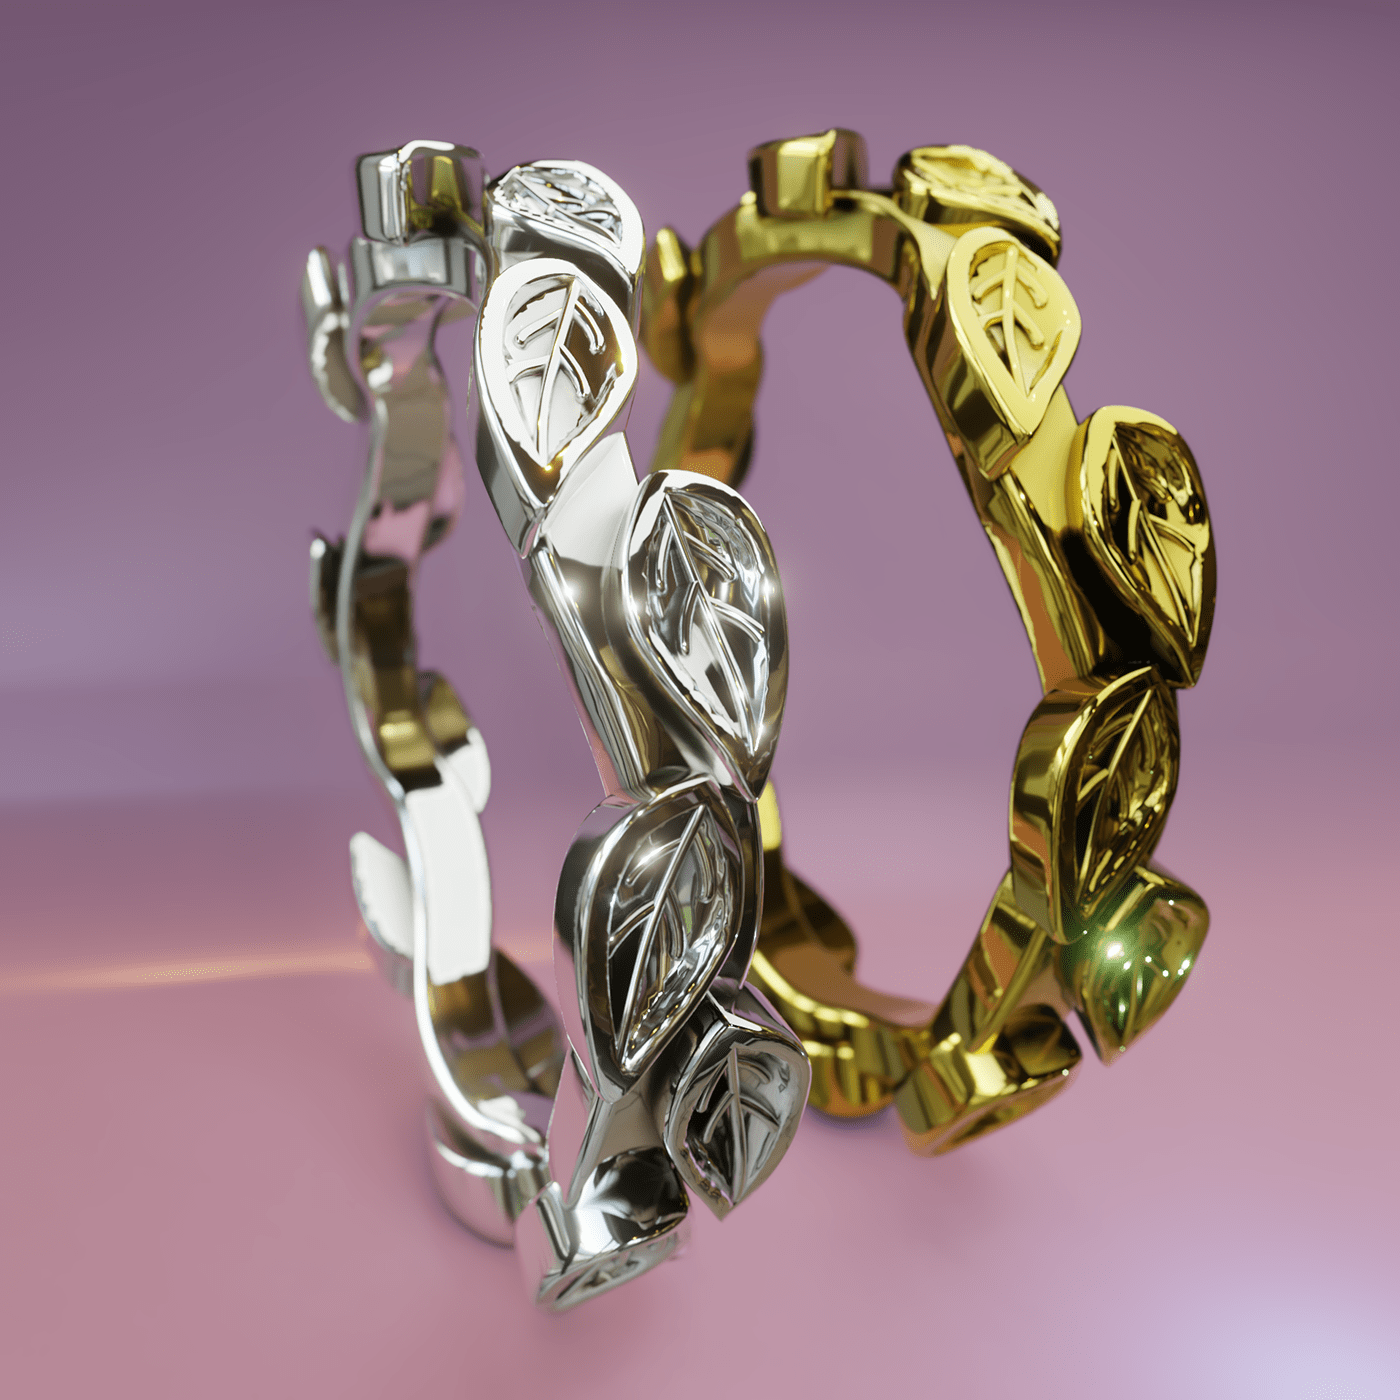 jewlery Zbrush Rhinoceros blender Jewelry Design  3D Render 3Djewelry